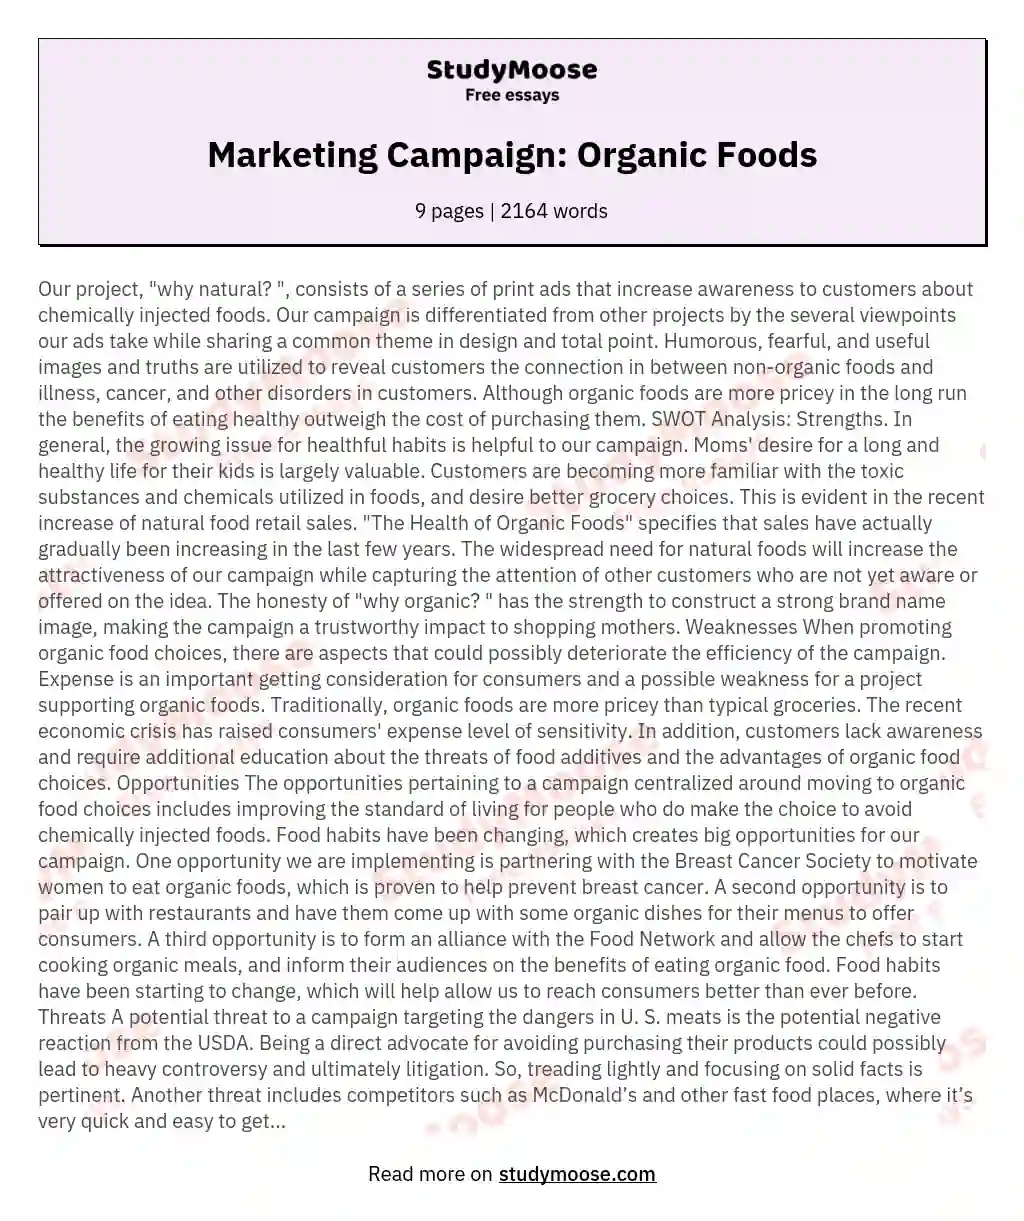 Marketing Campaign: Organic Foods